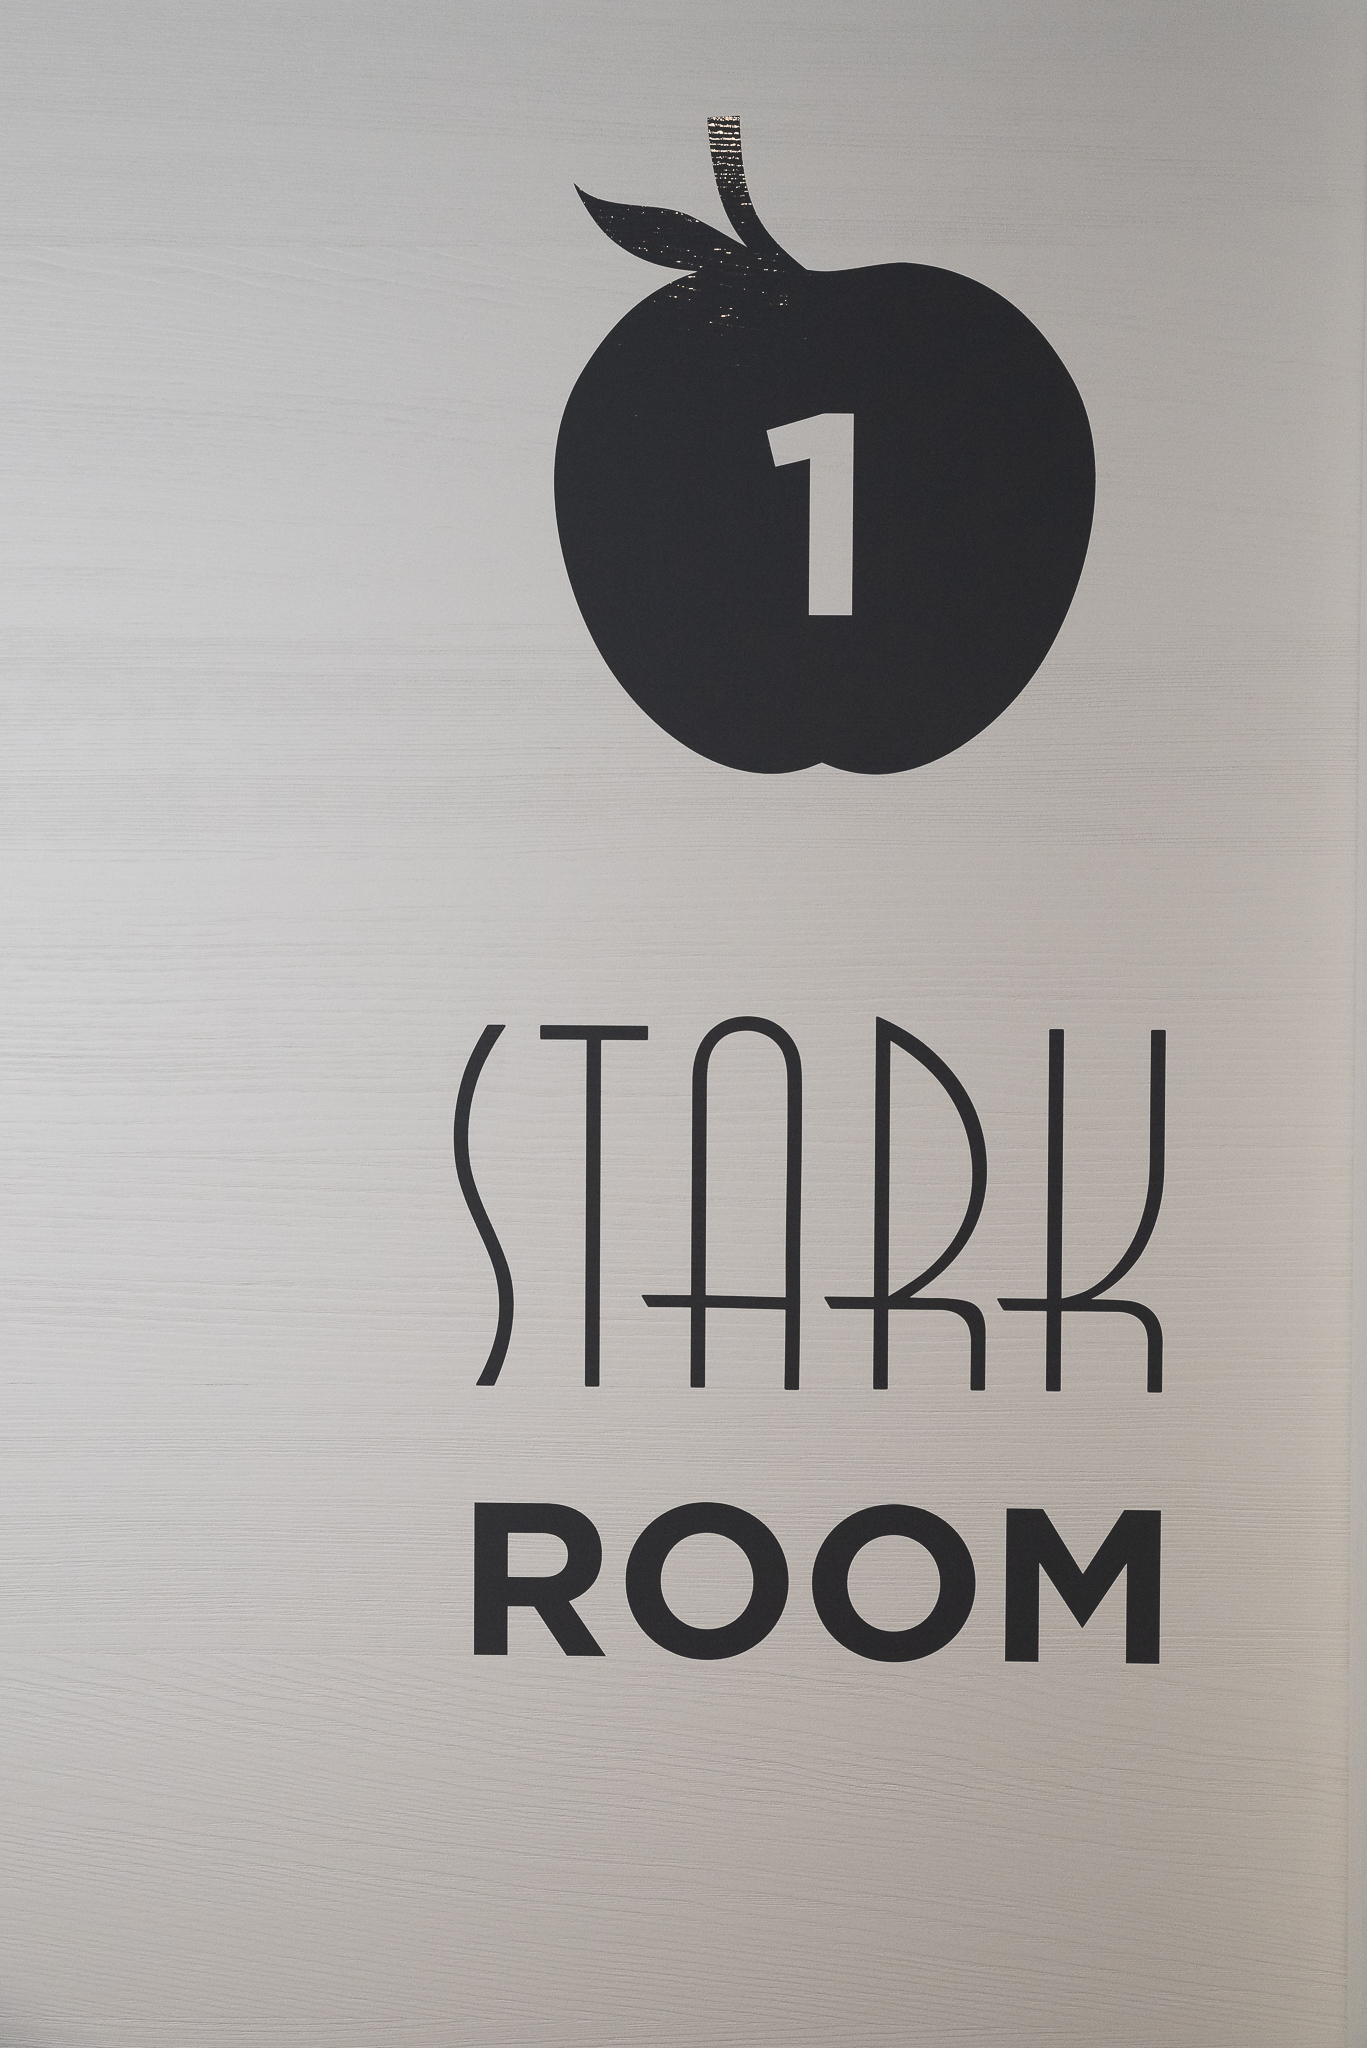 Stark Room